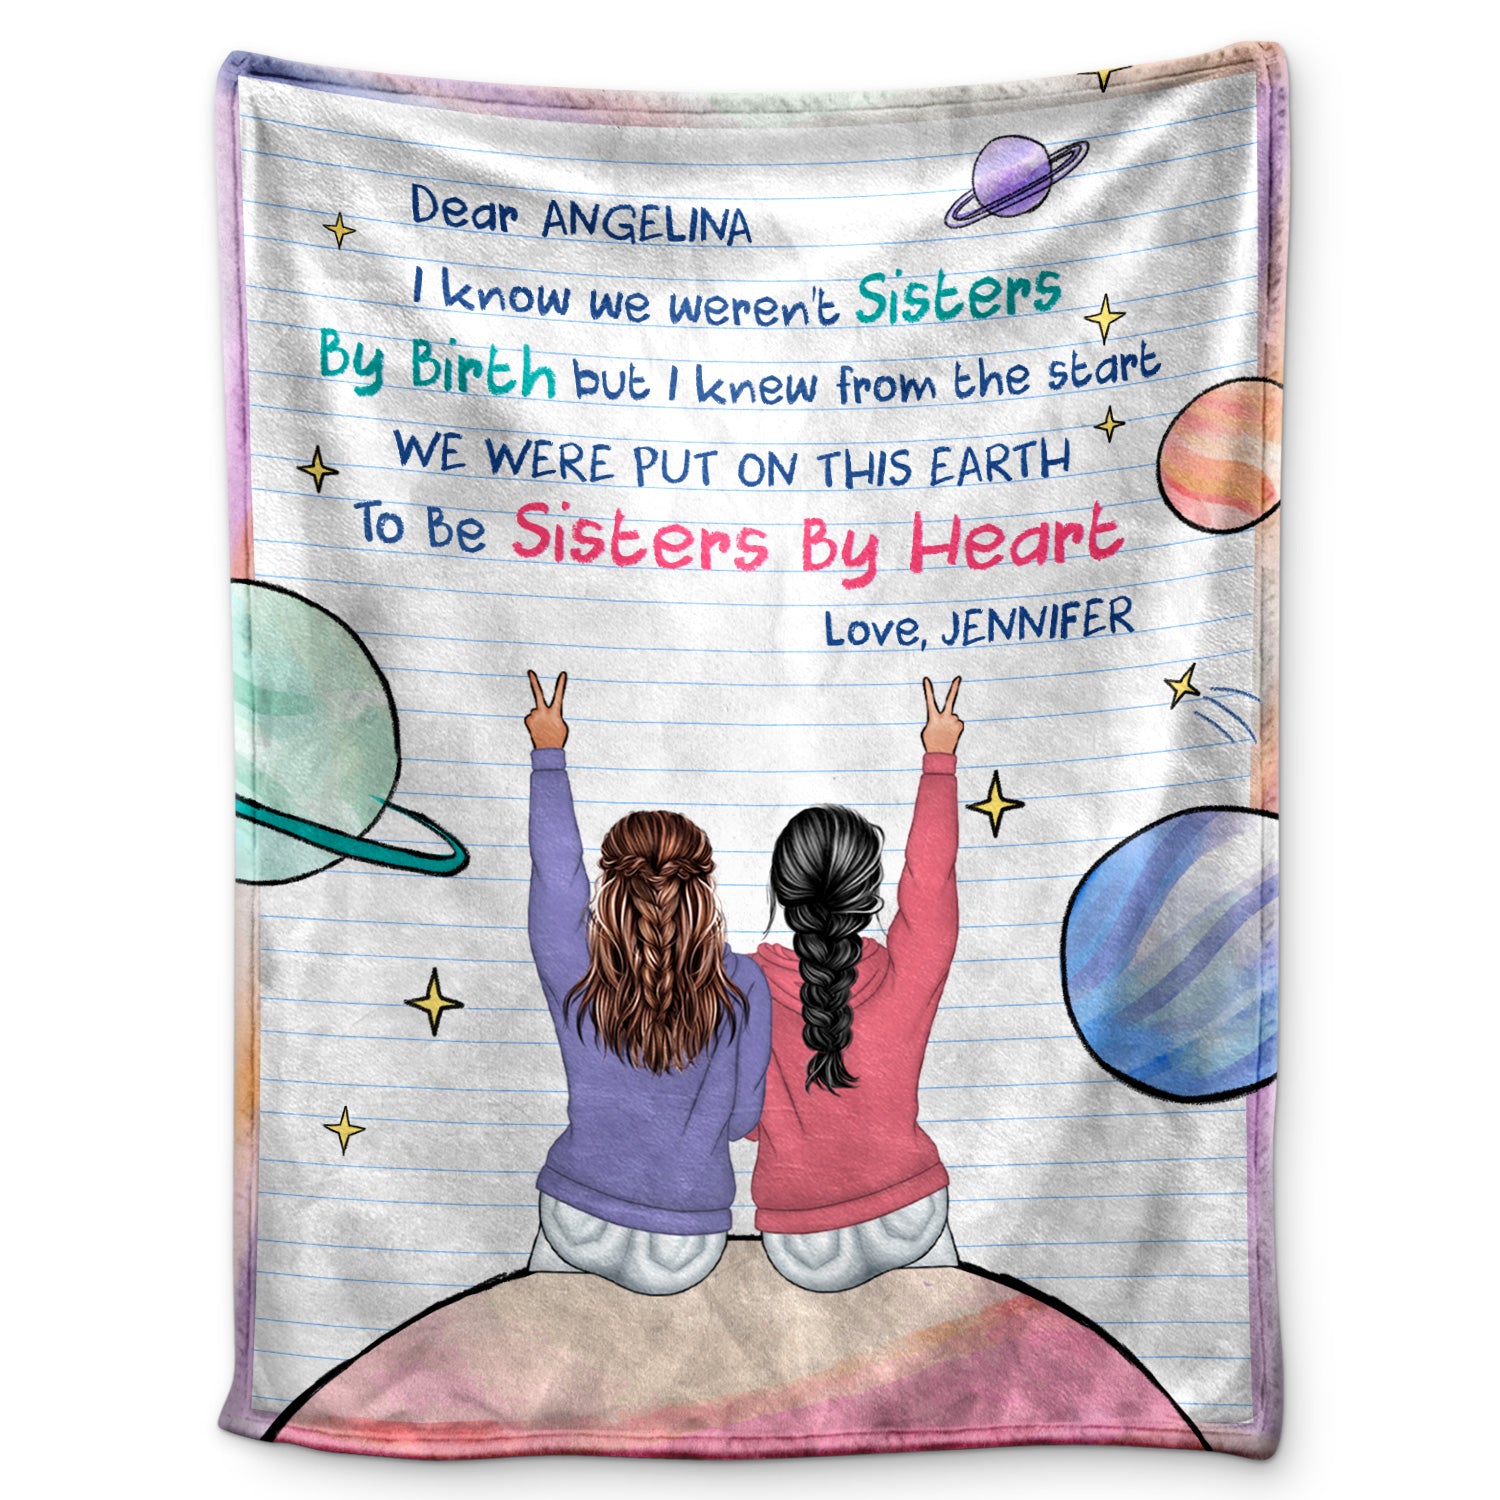 We Weren't Sisters By Birth - Gift For Bestie - Personalized Fleece Blanket